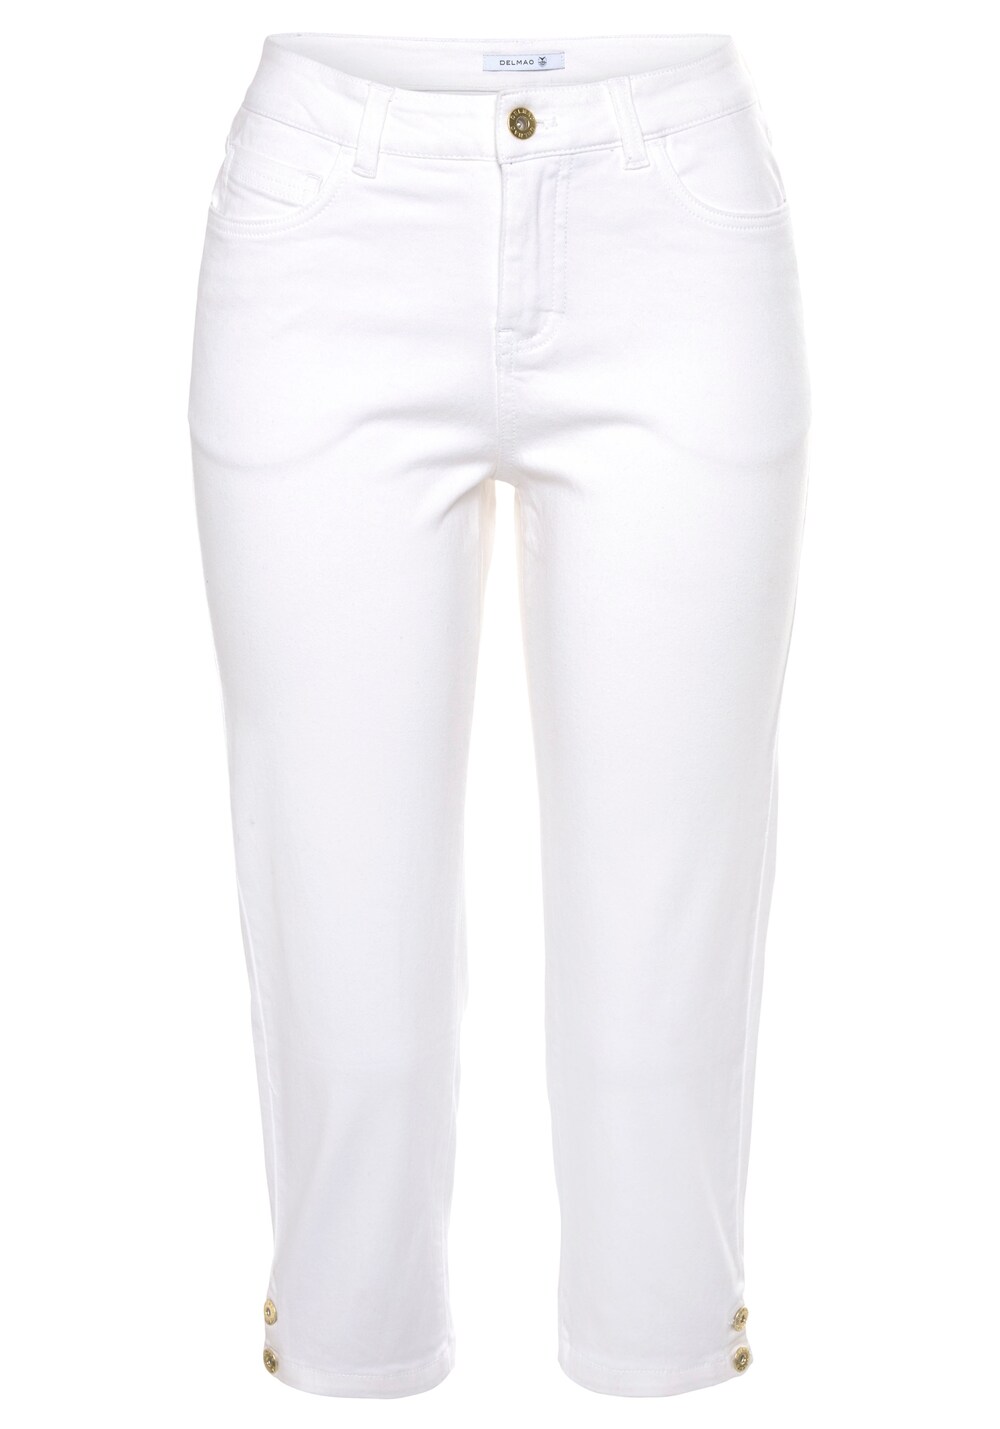 Узкие брюки Delmao, натуральный белый